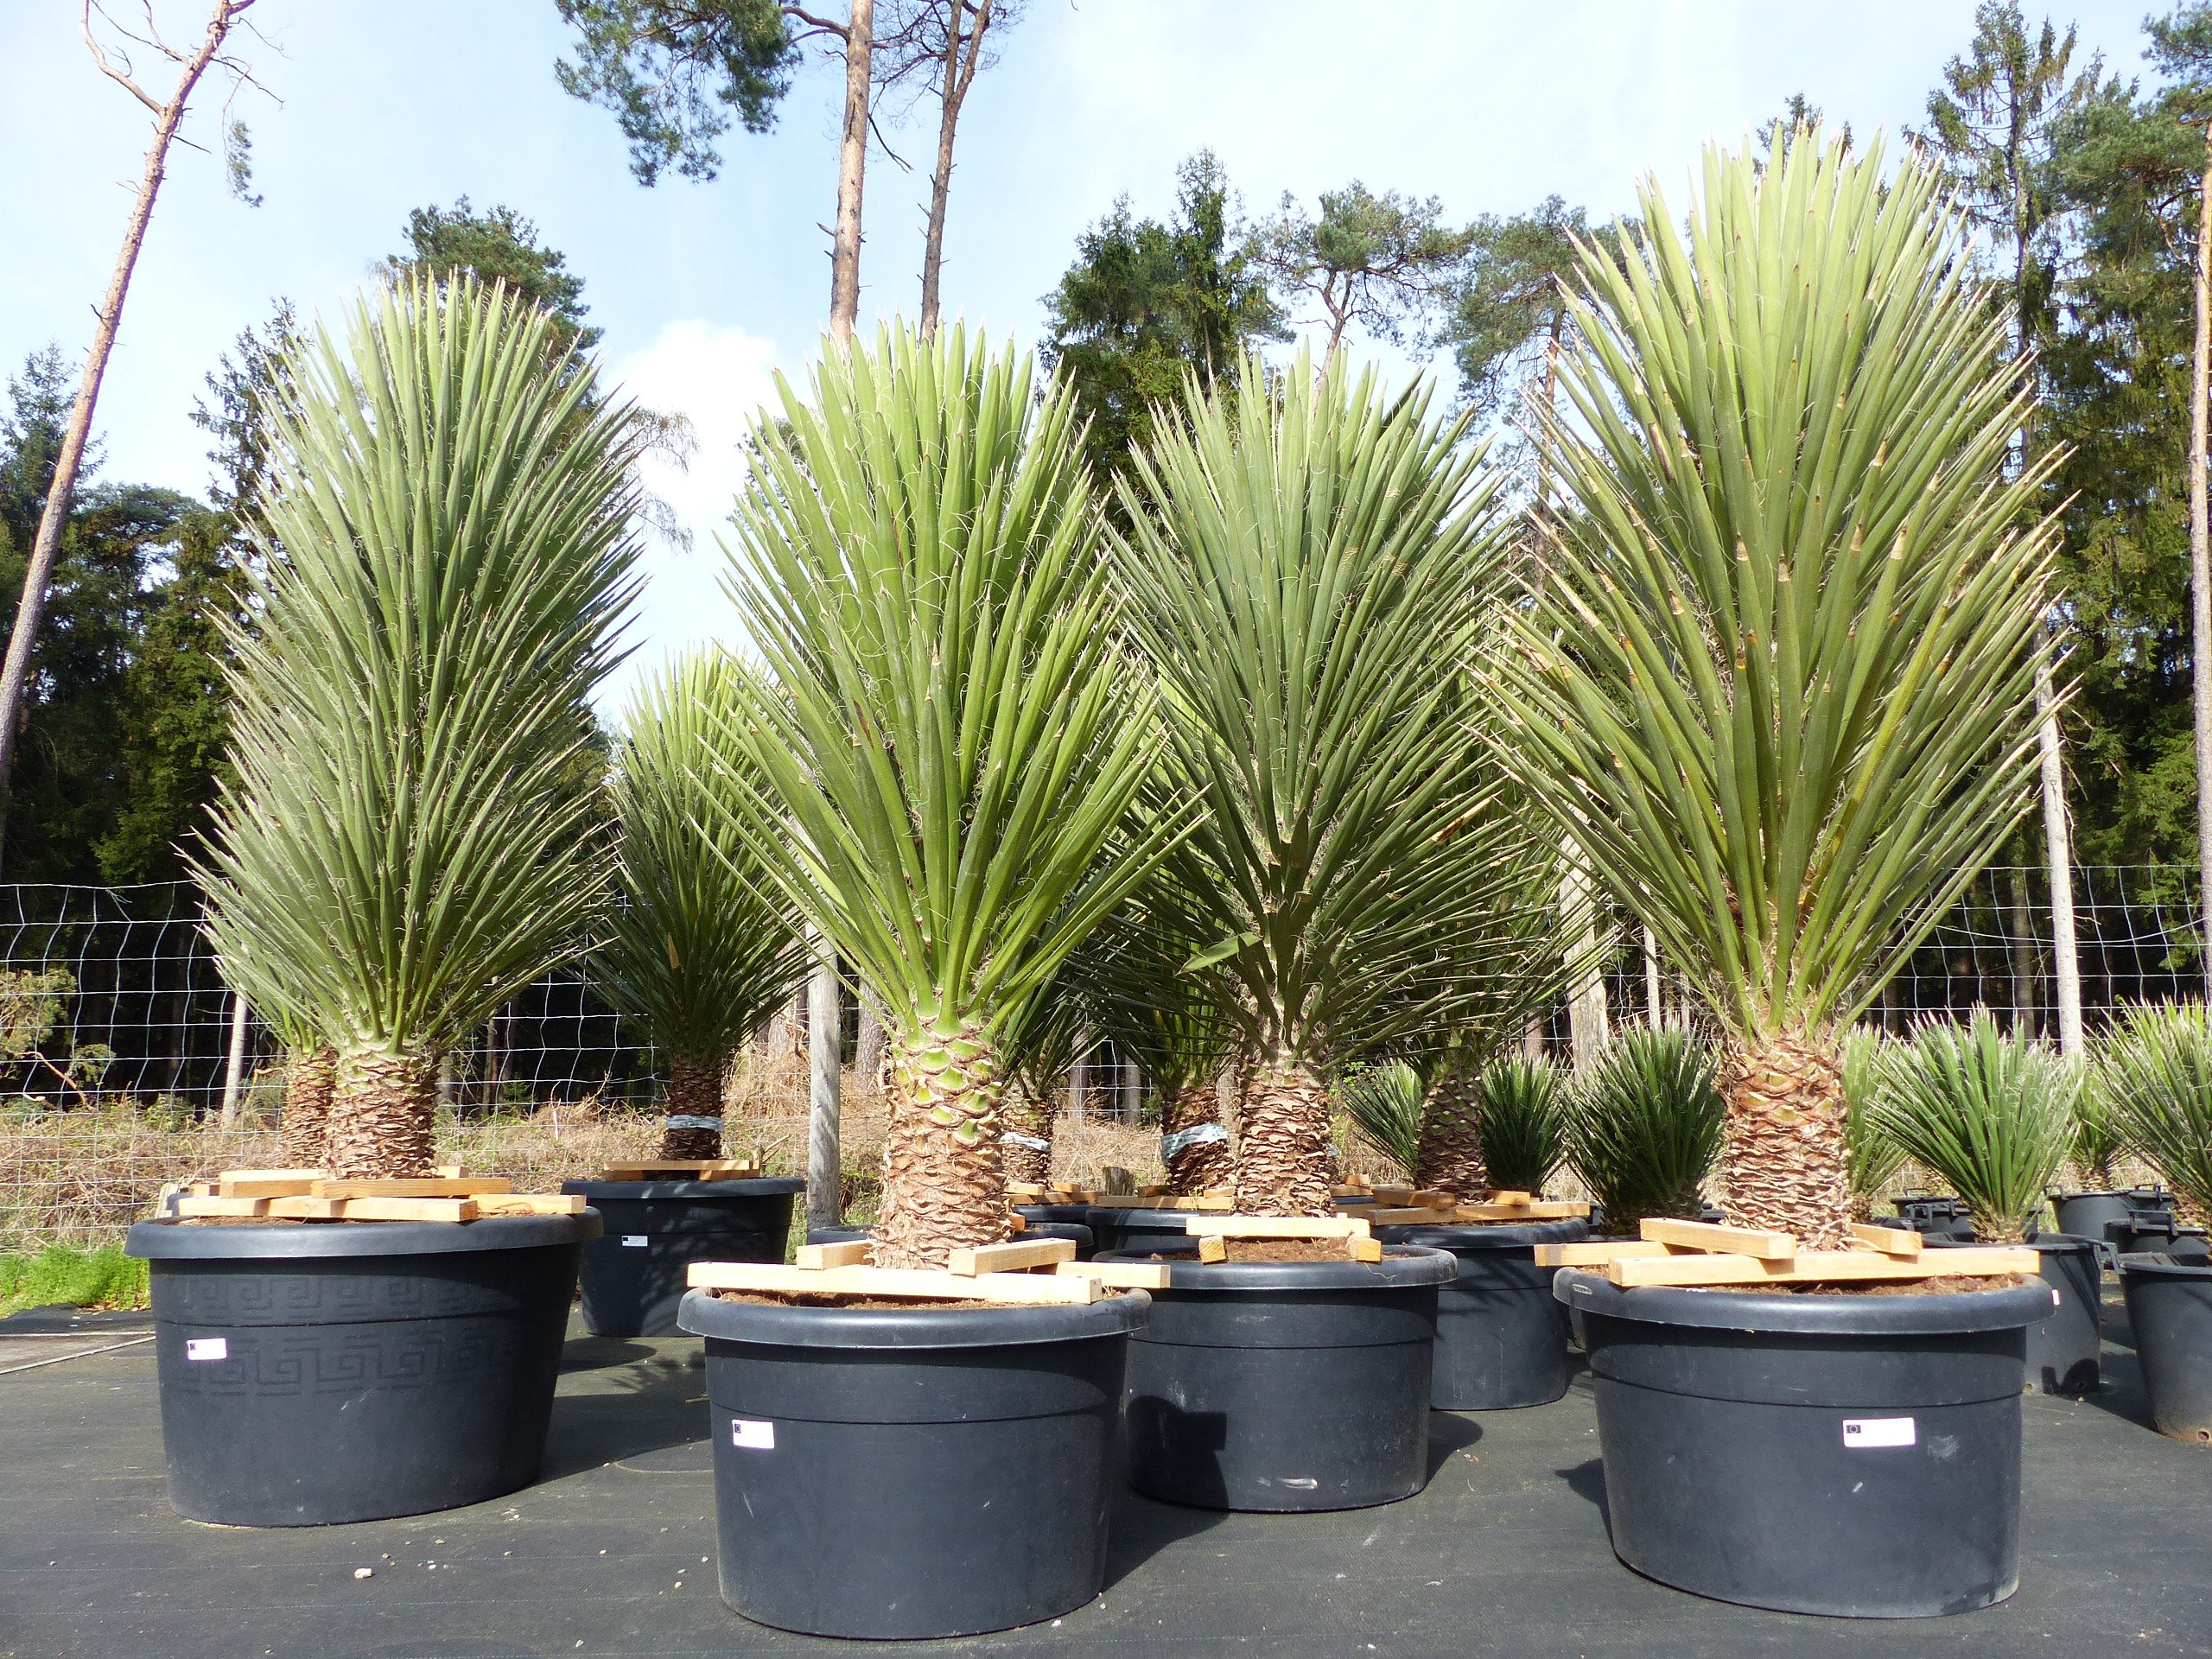 XXL Yucca Palme Filifera, 180 cm - 200, Stamm 40 - 50 cm, winterhart -13 Grad